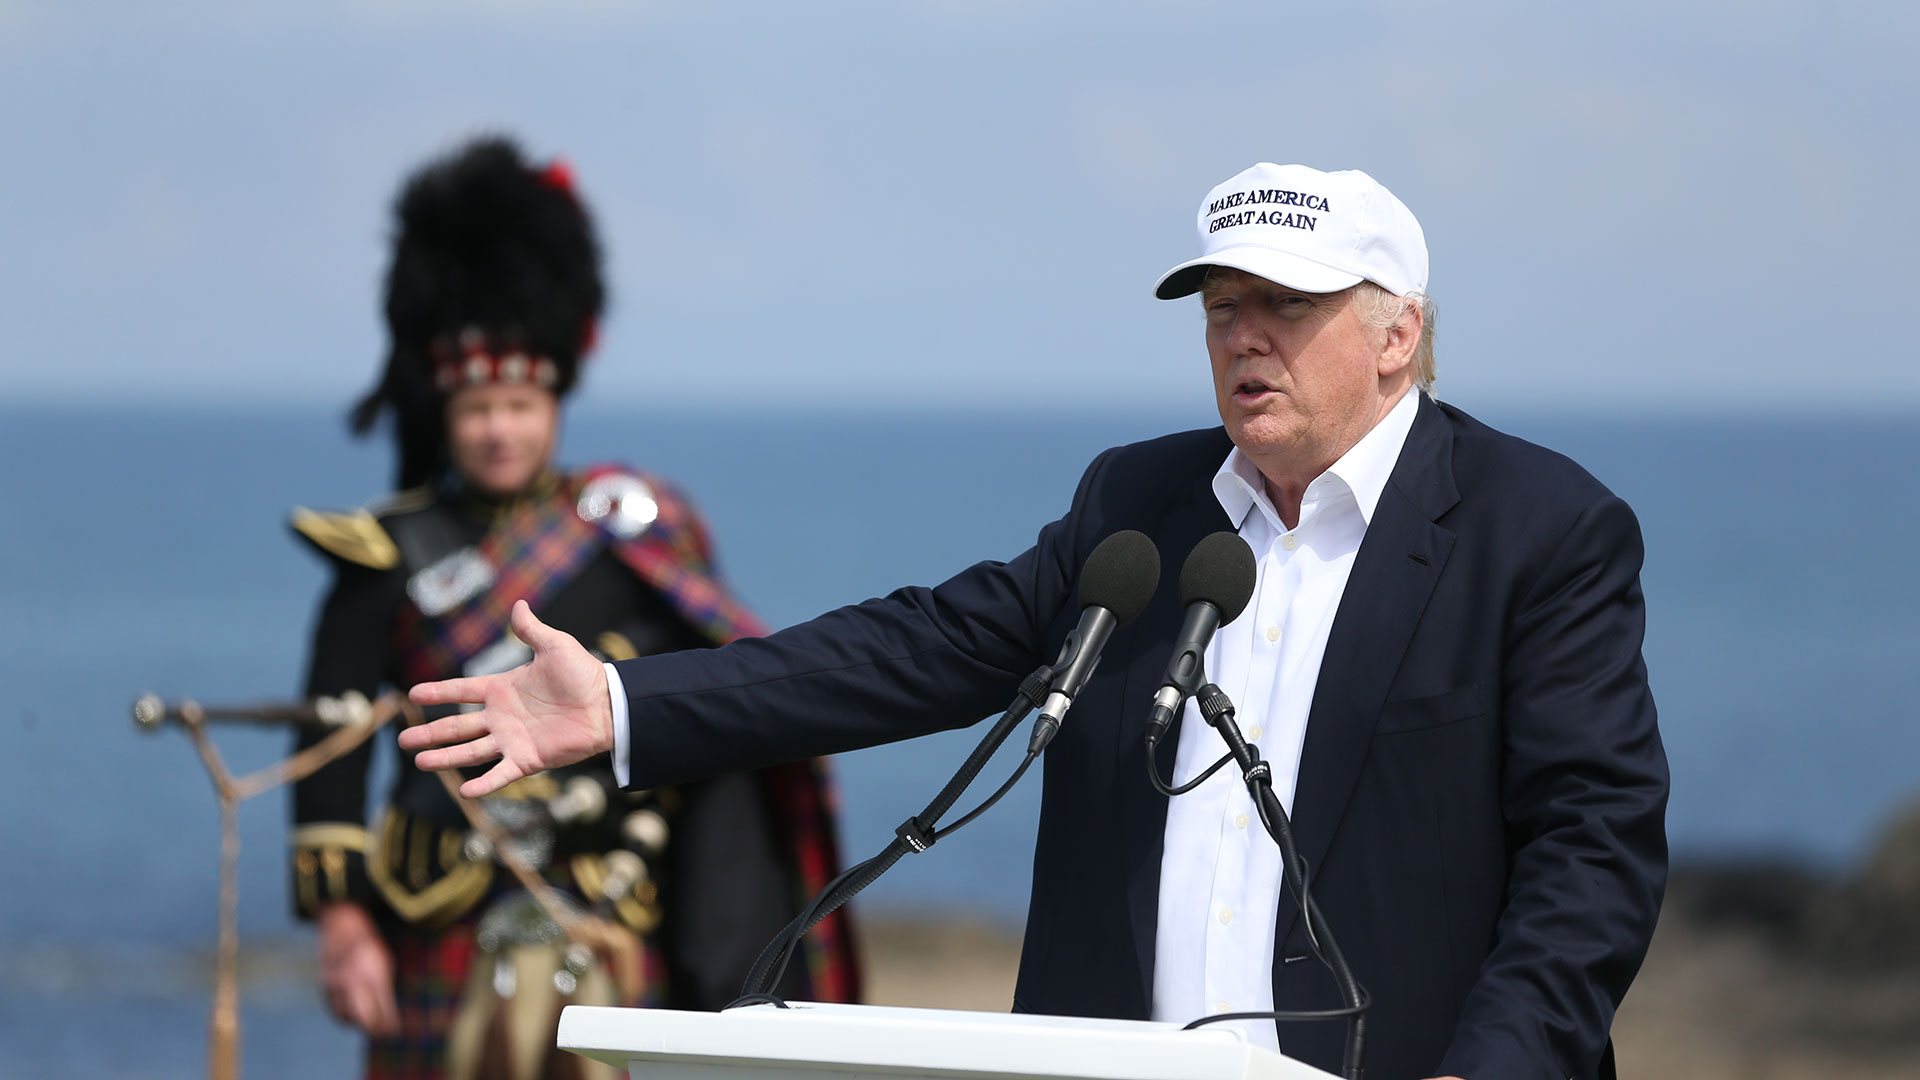 Donald Trump at golf course in Scotland